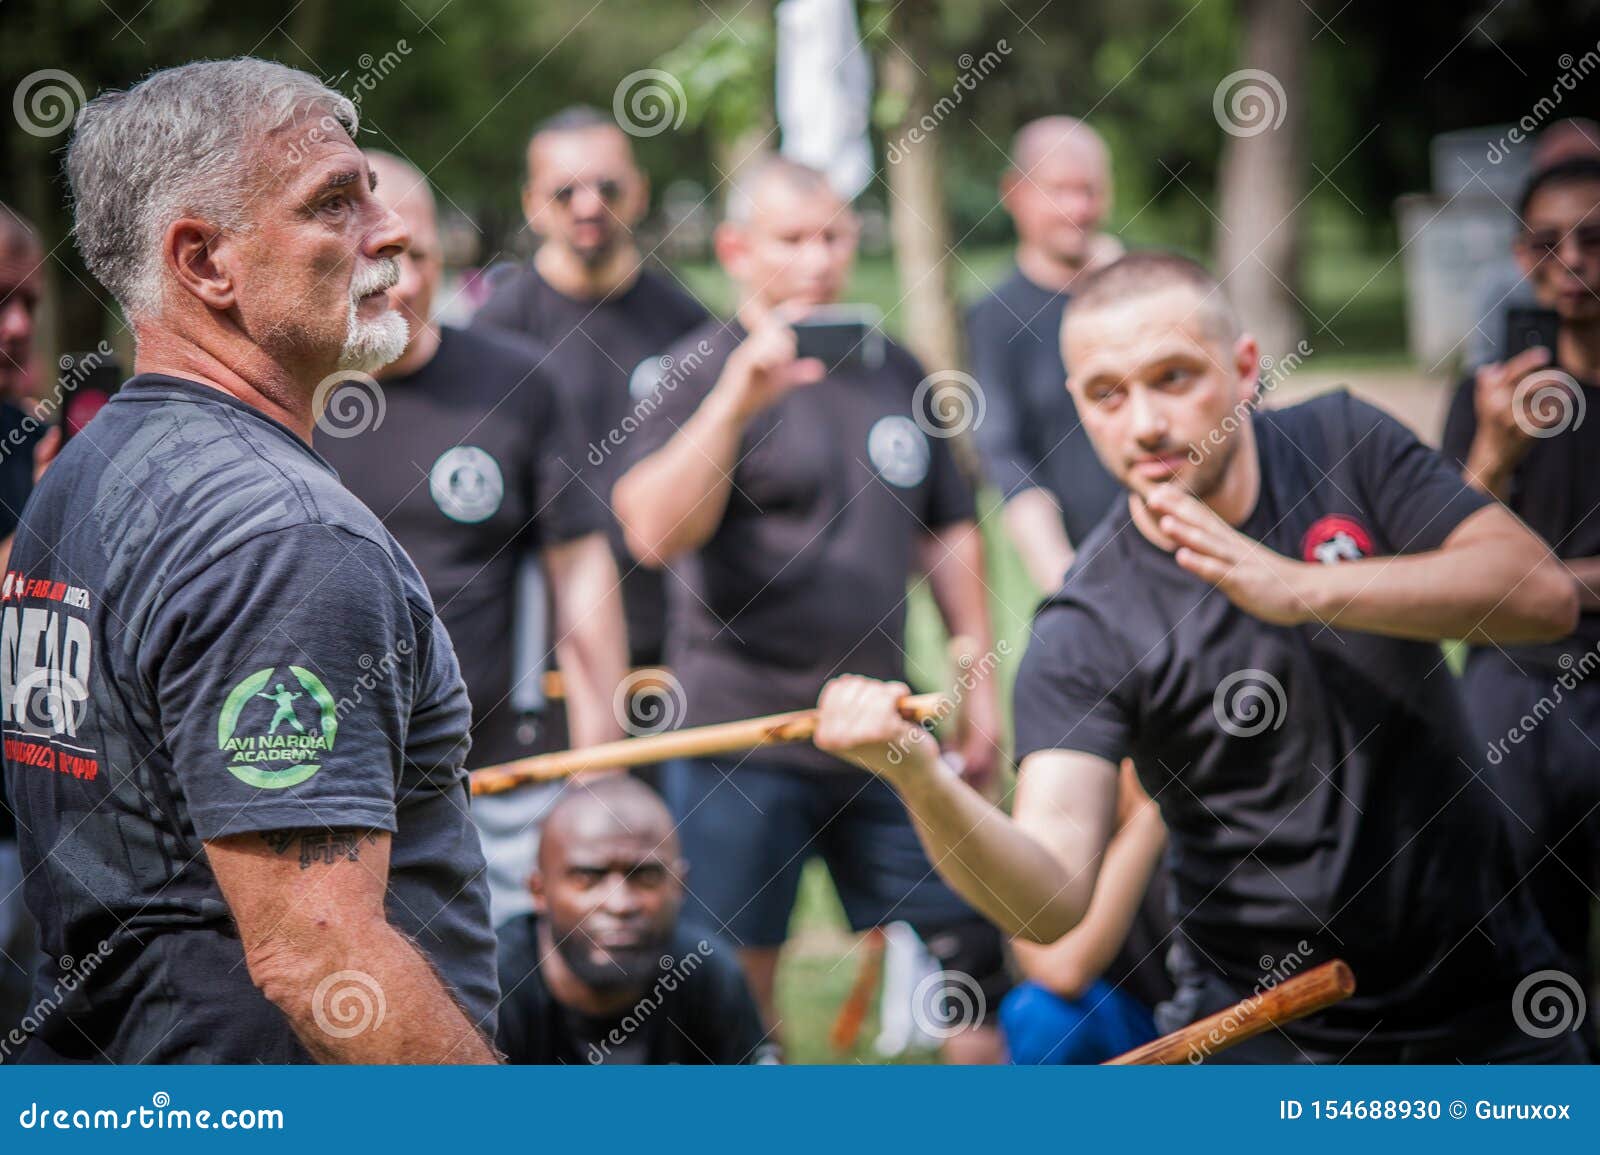 Escrima and kapap instructor demonstrates sticks fighting